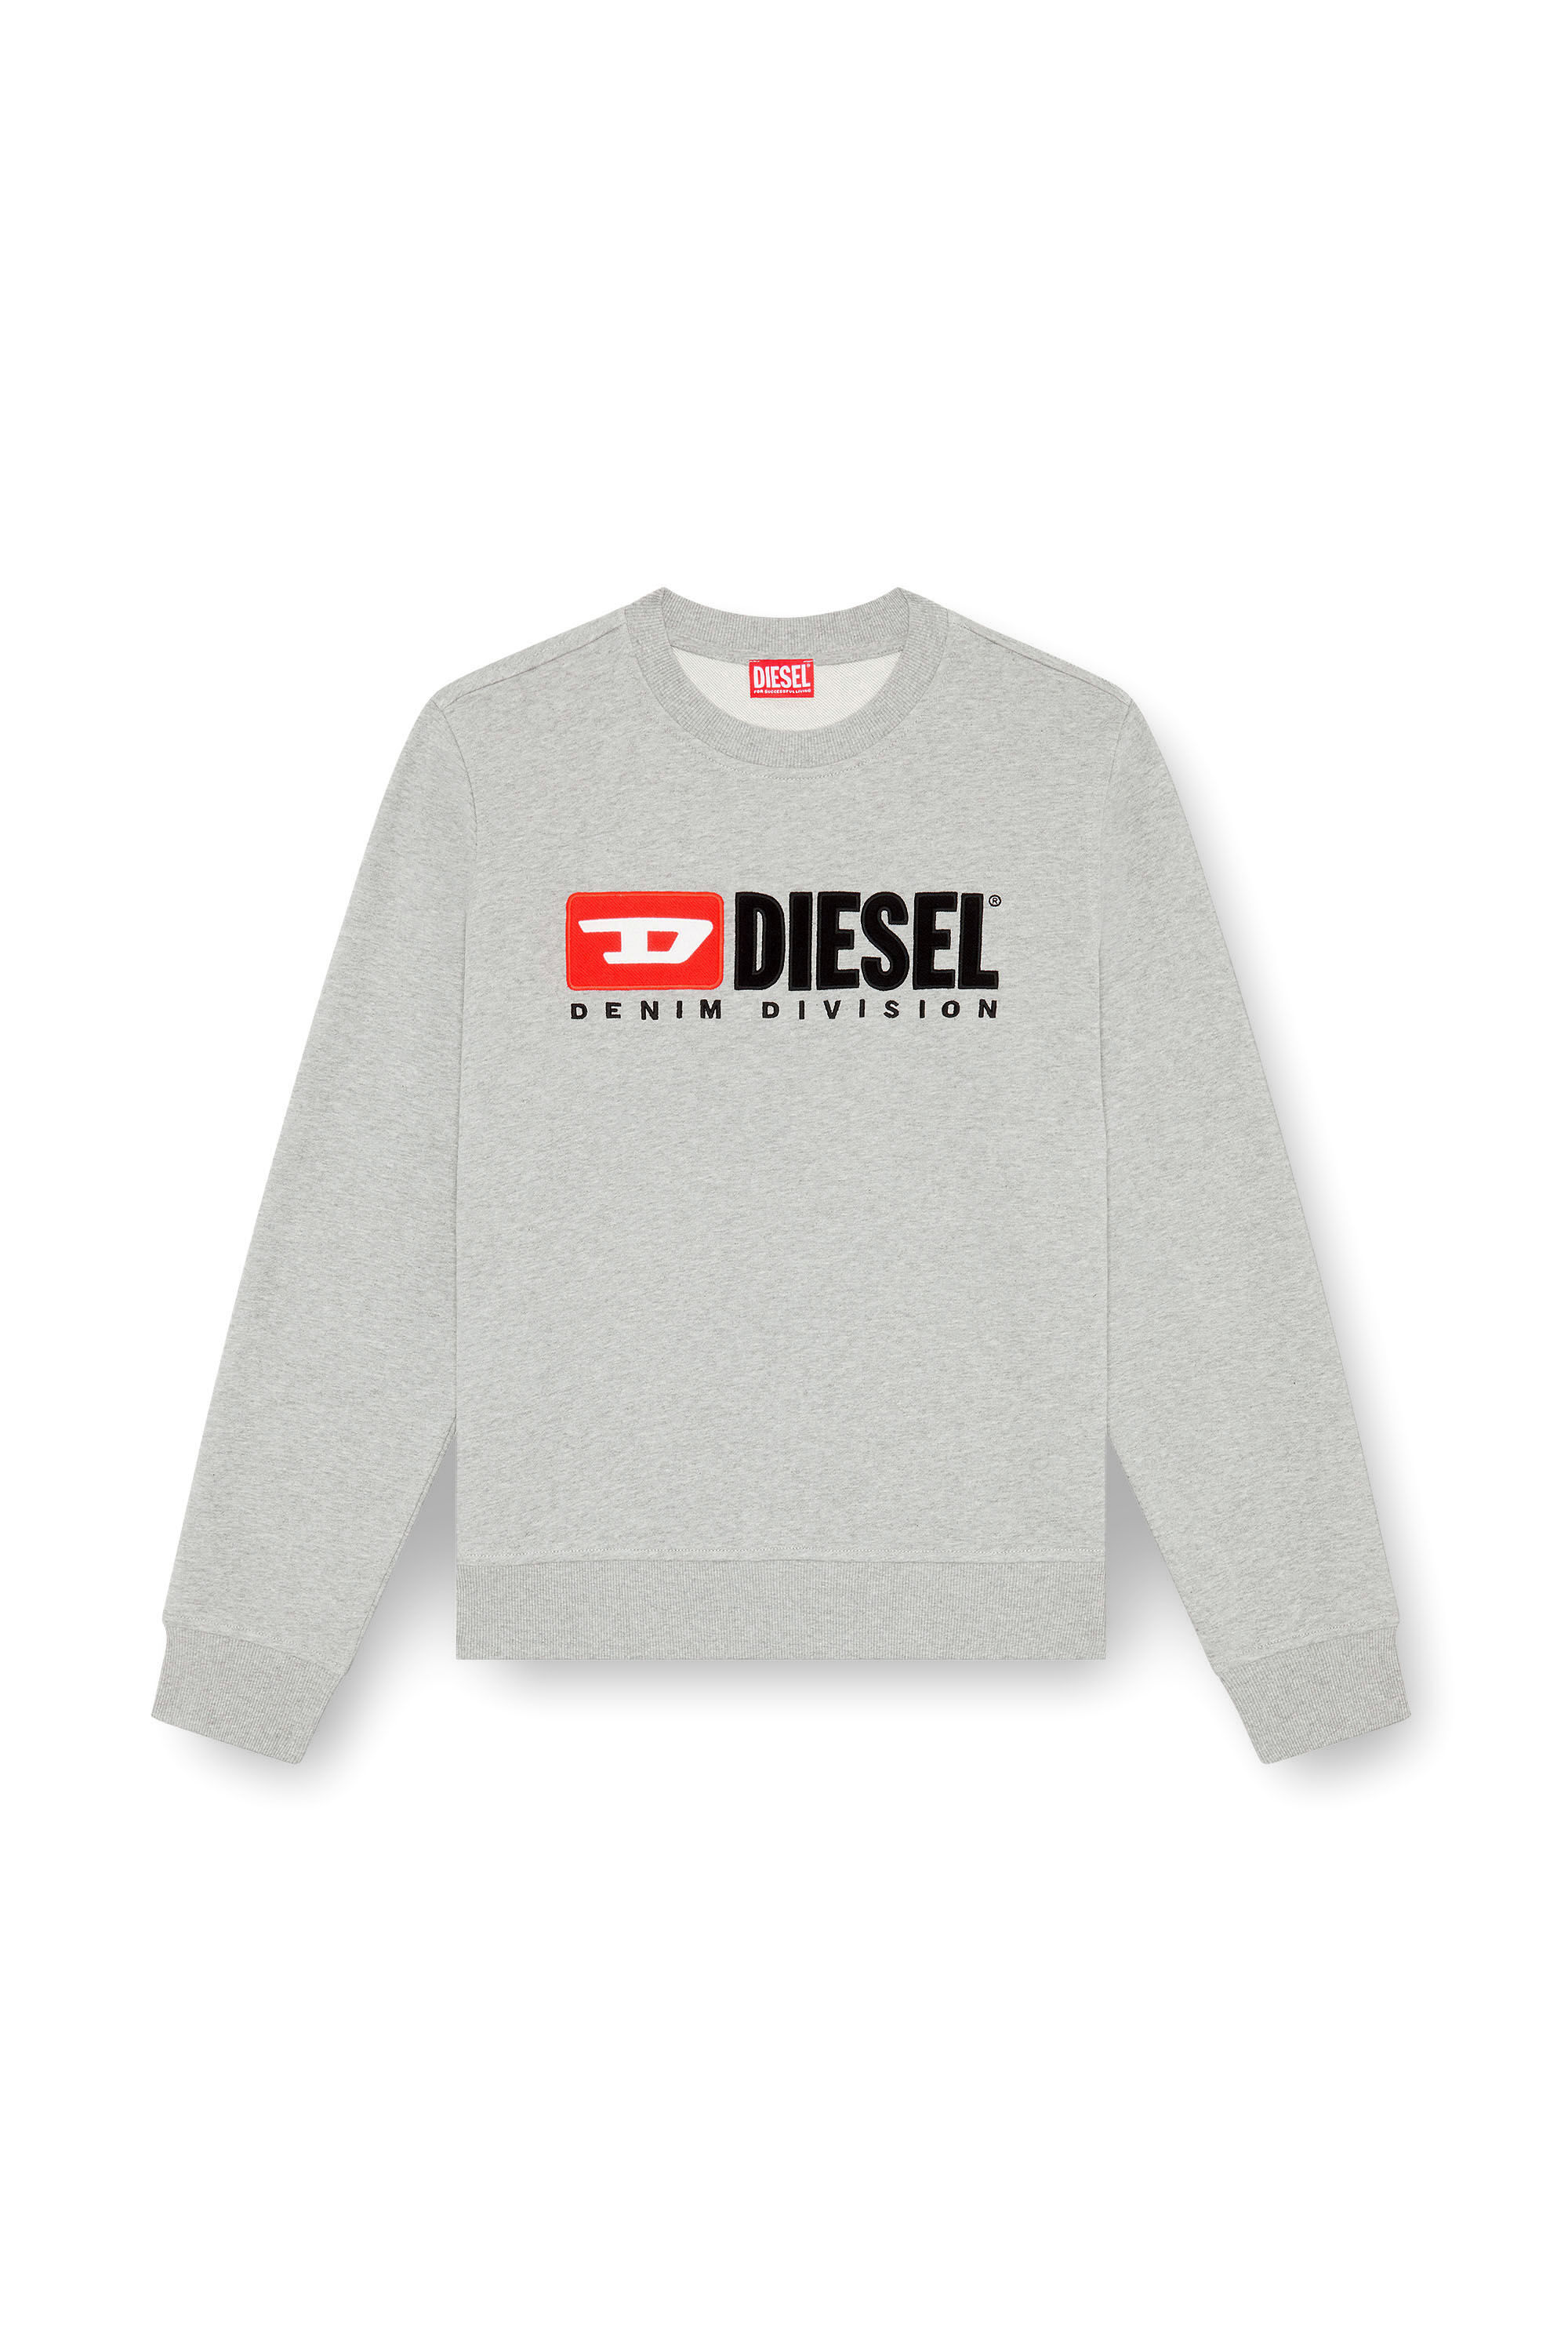 Diesel - S-BOXT-DIV, Man Sweatshirt with Denim Division logo in Grey - Image 2